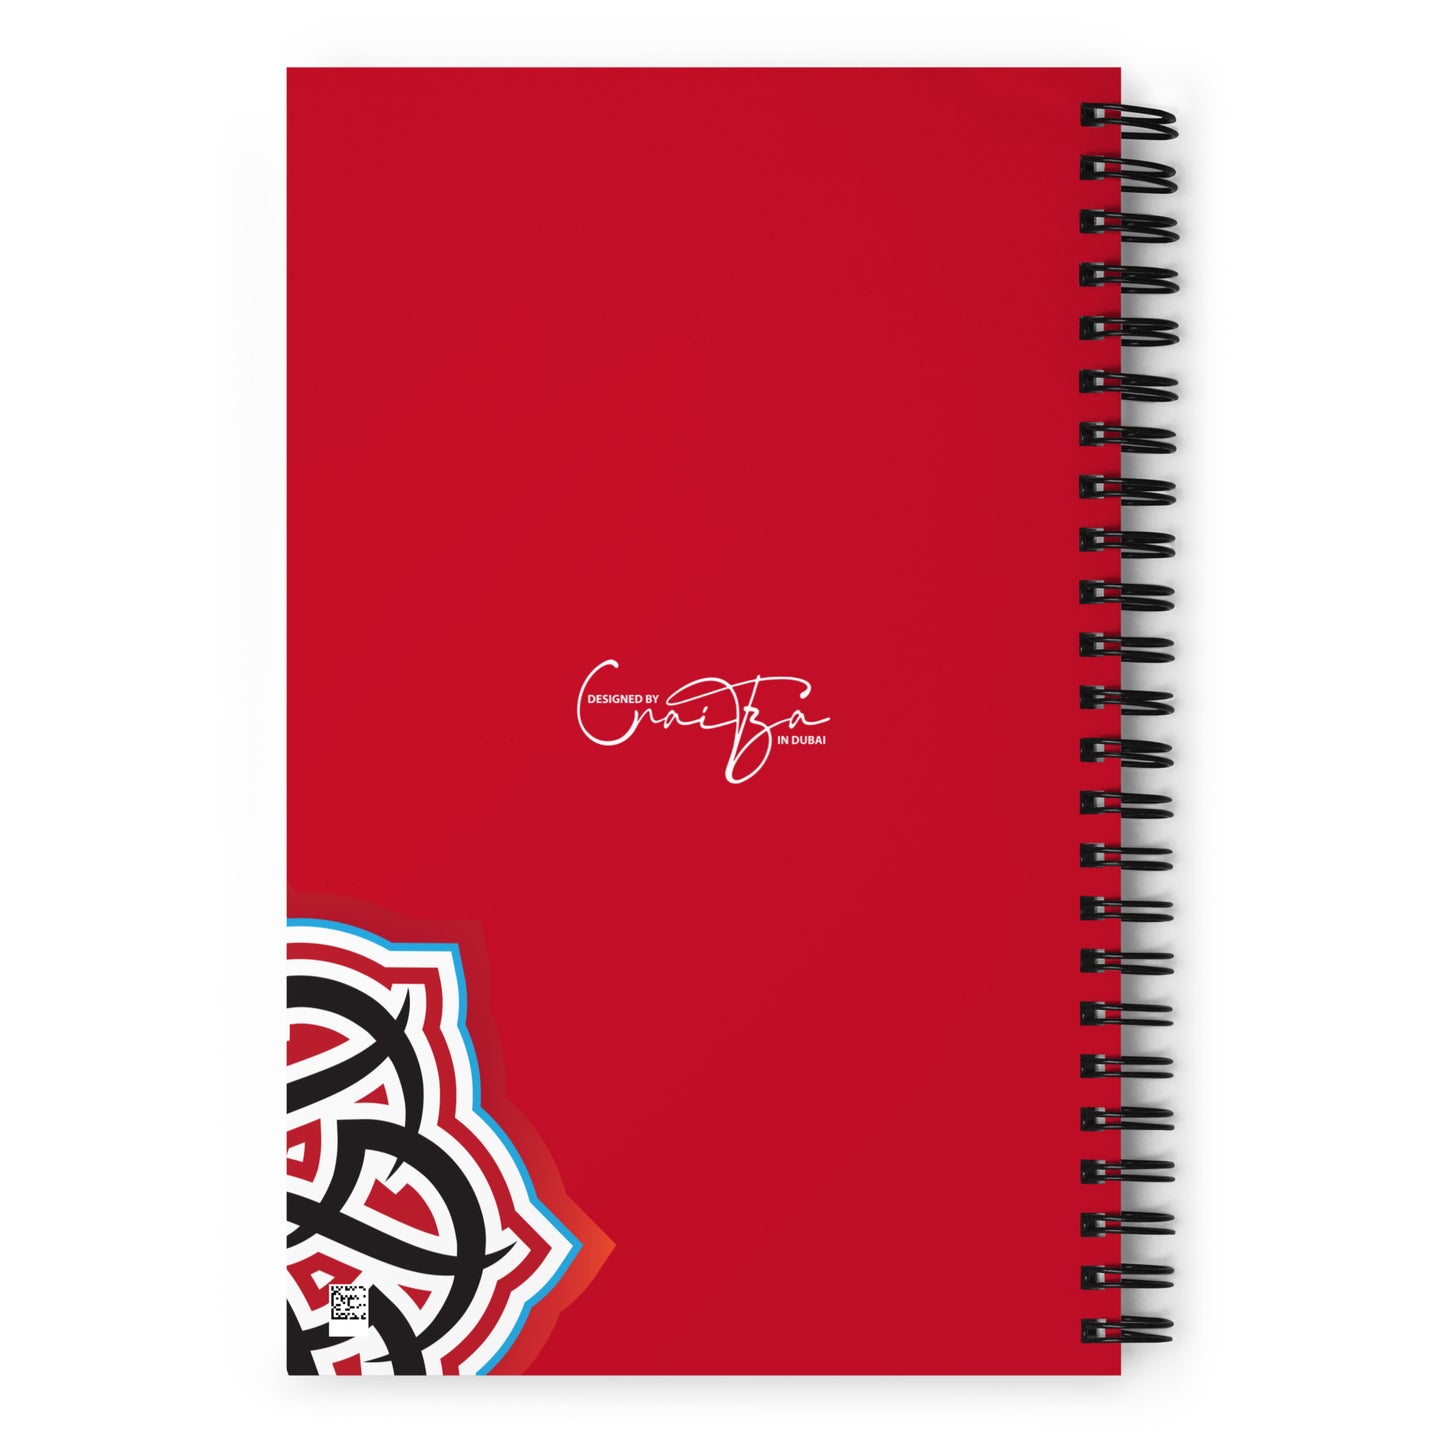 Arabian Summer Dream - Spiral notebook by Craitza© Red Edition